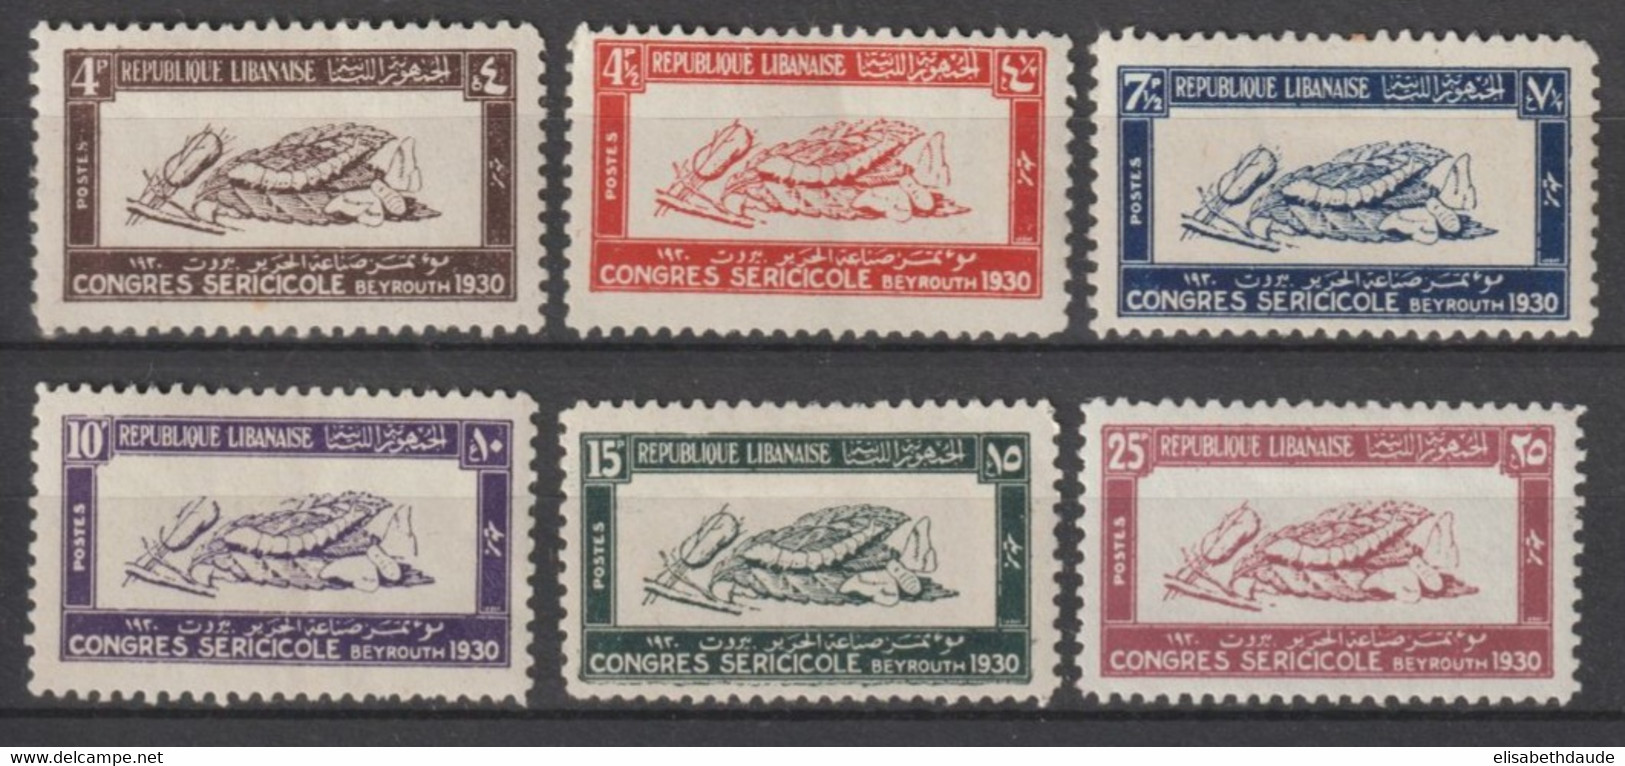 GRAND-LIBAN - 1930 - SERIE COMPLETE CONGRES SERICOLE - YVERT N°122/127 * MH - COTE = 104 EUR. - Ungebraucht